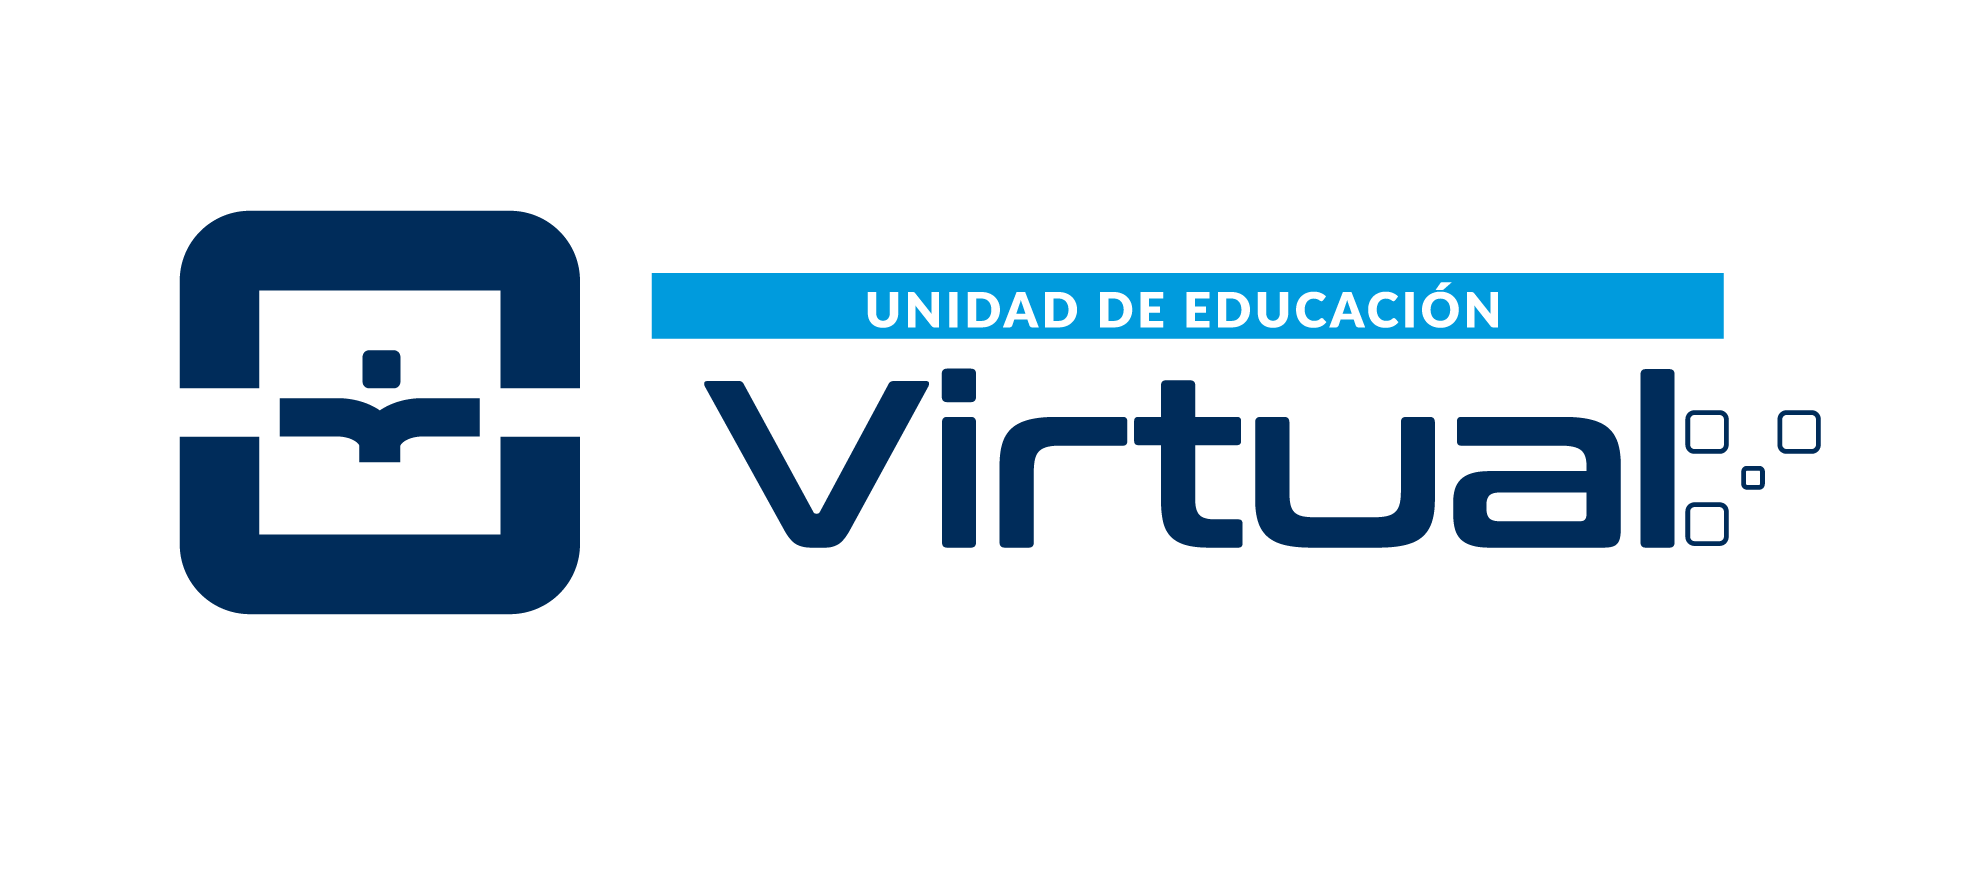 Instituto Superior Tecnológico Consulting Group Ecuador Esculapio